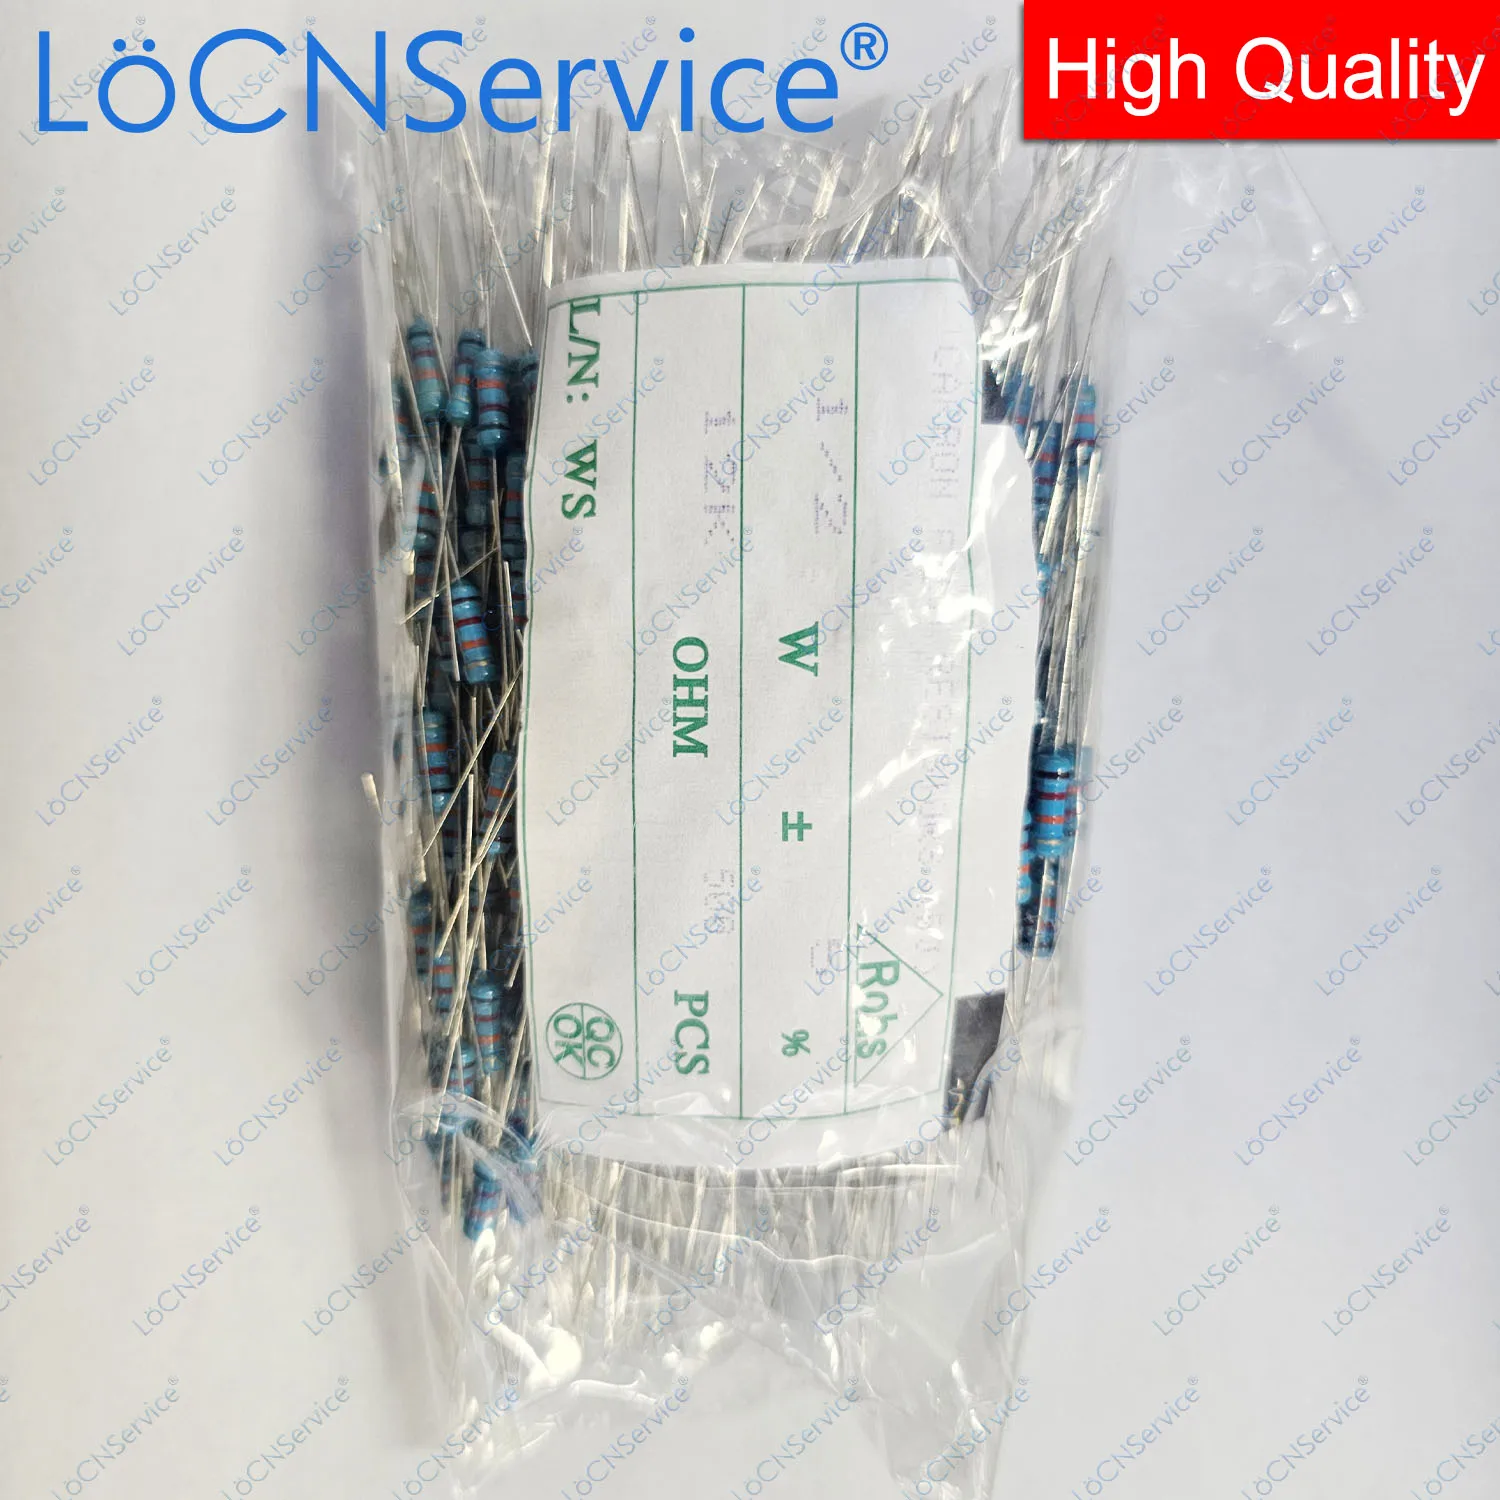 LoCNСервис 500 шт./лот 5% 1/2 Вт 3.9K 4.3K 4.7K 5.1K 5.6K 6.2K 6.8K 7.5K 8.2K 9.1K Резистор из углеродной пленки DIP ОМ 5